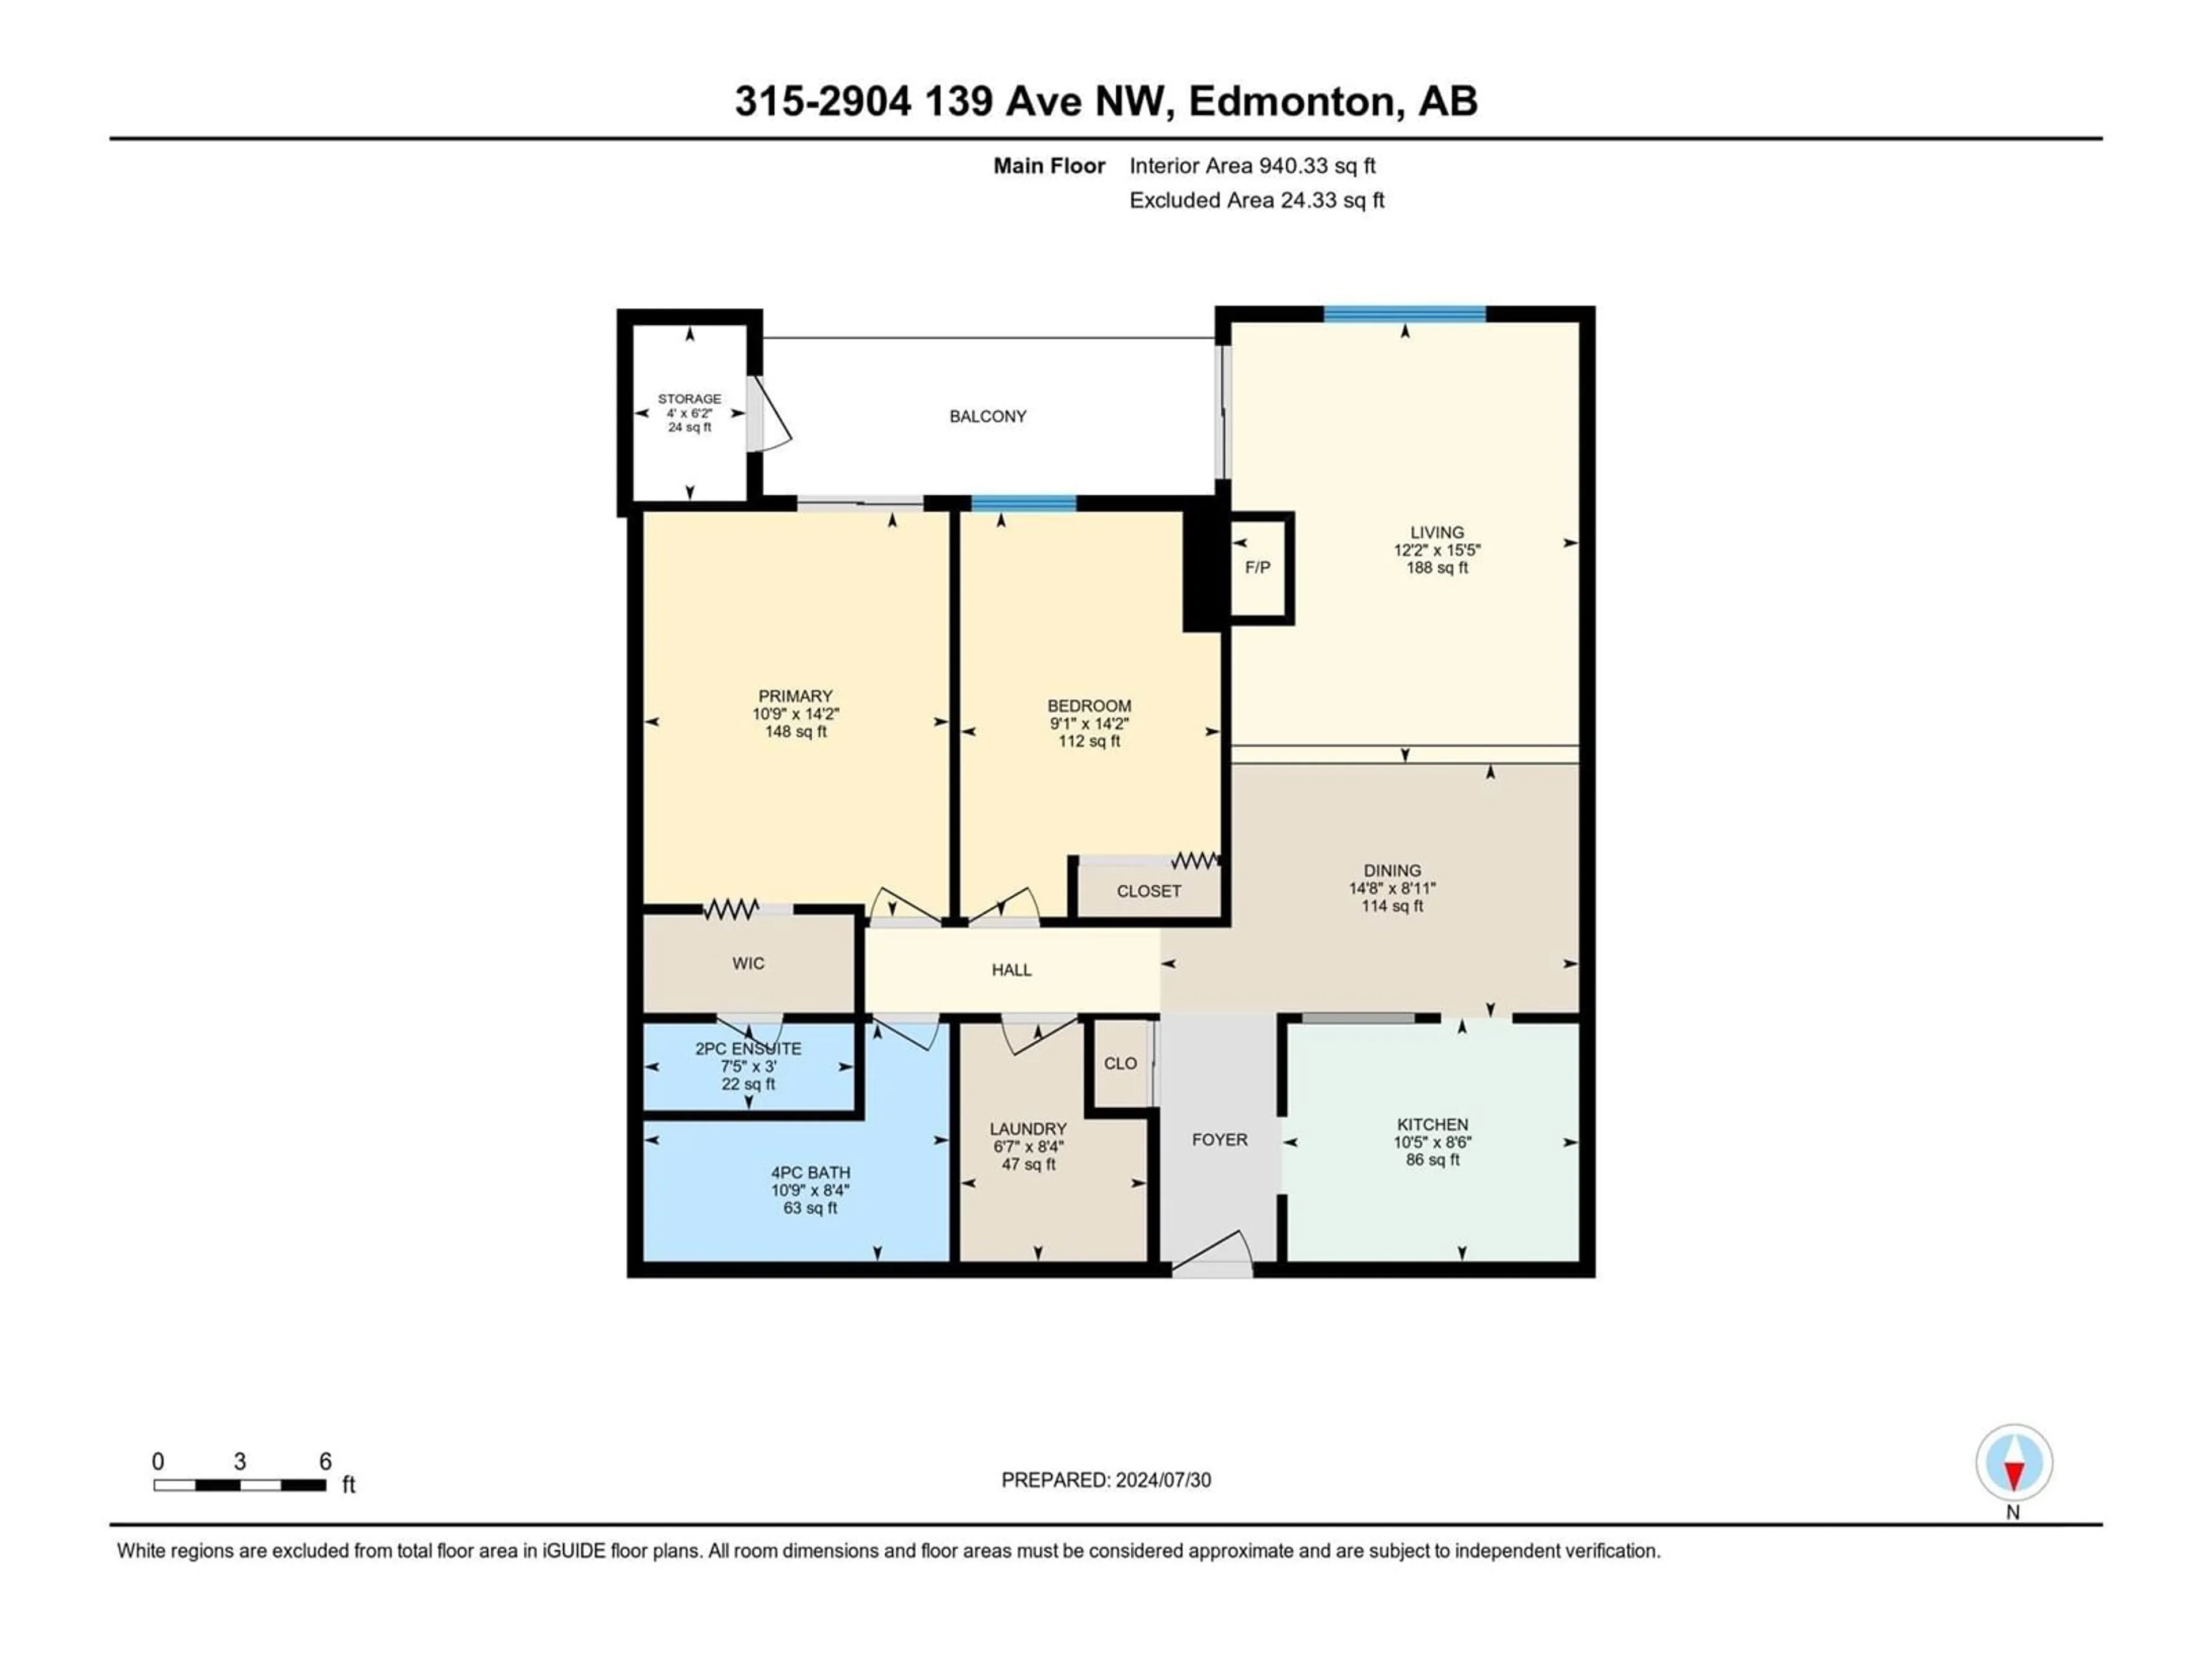 Floor plan for #315 2904 139 AV NW, Edmonton Alberta T5Y1P7